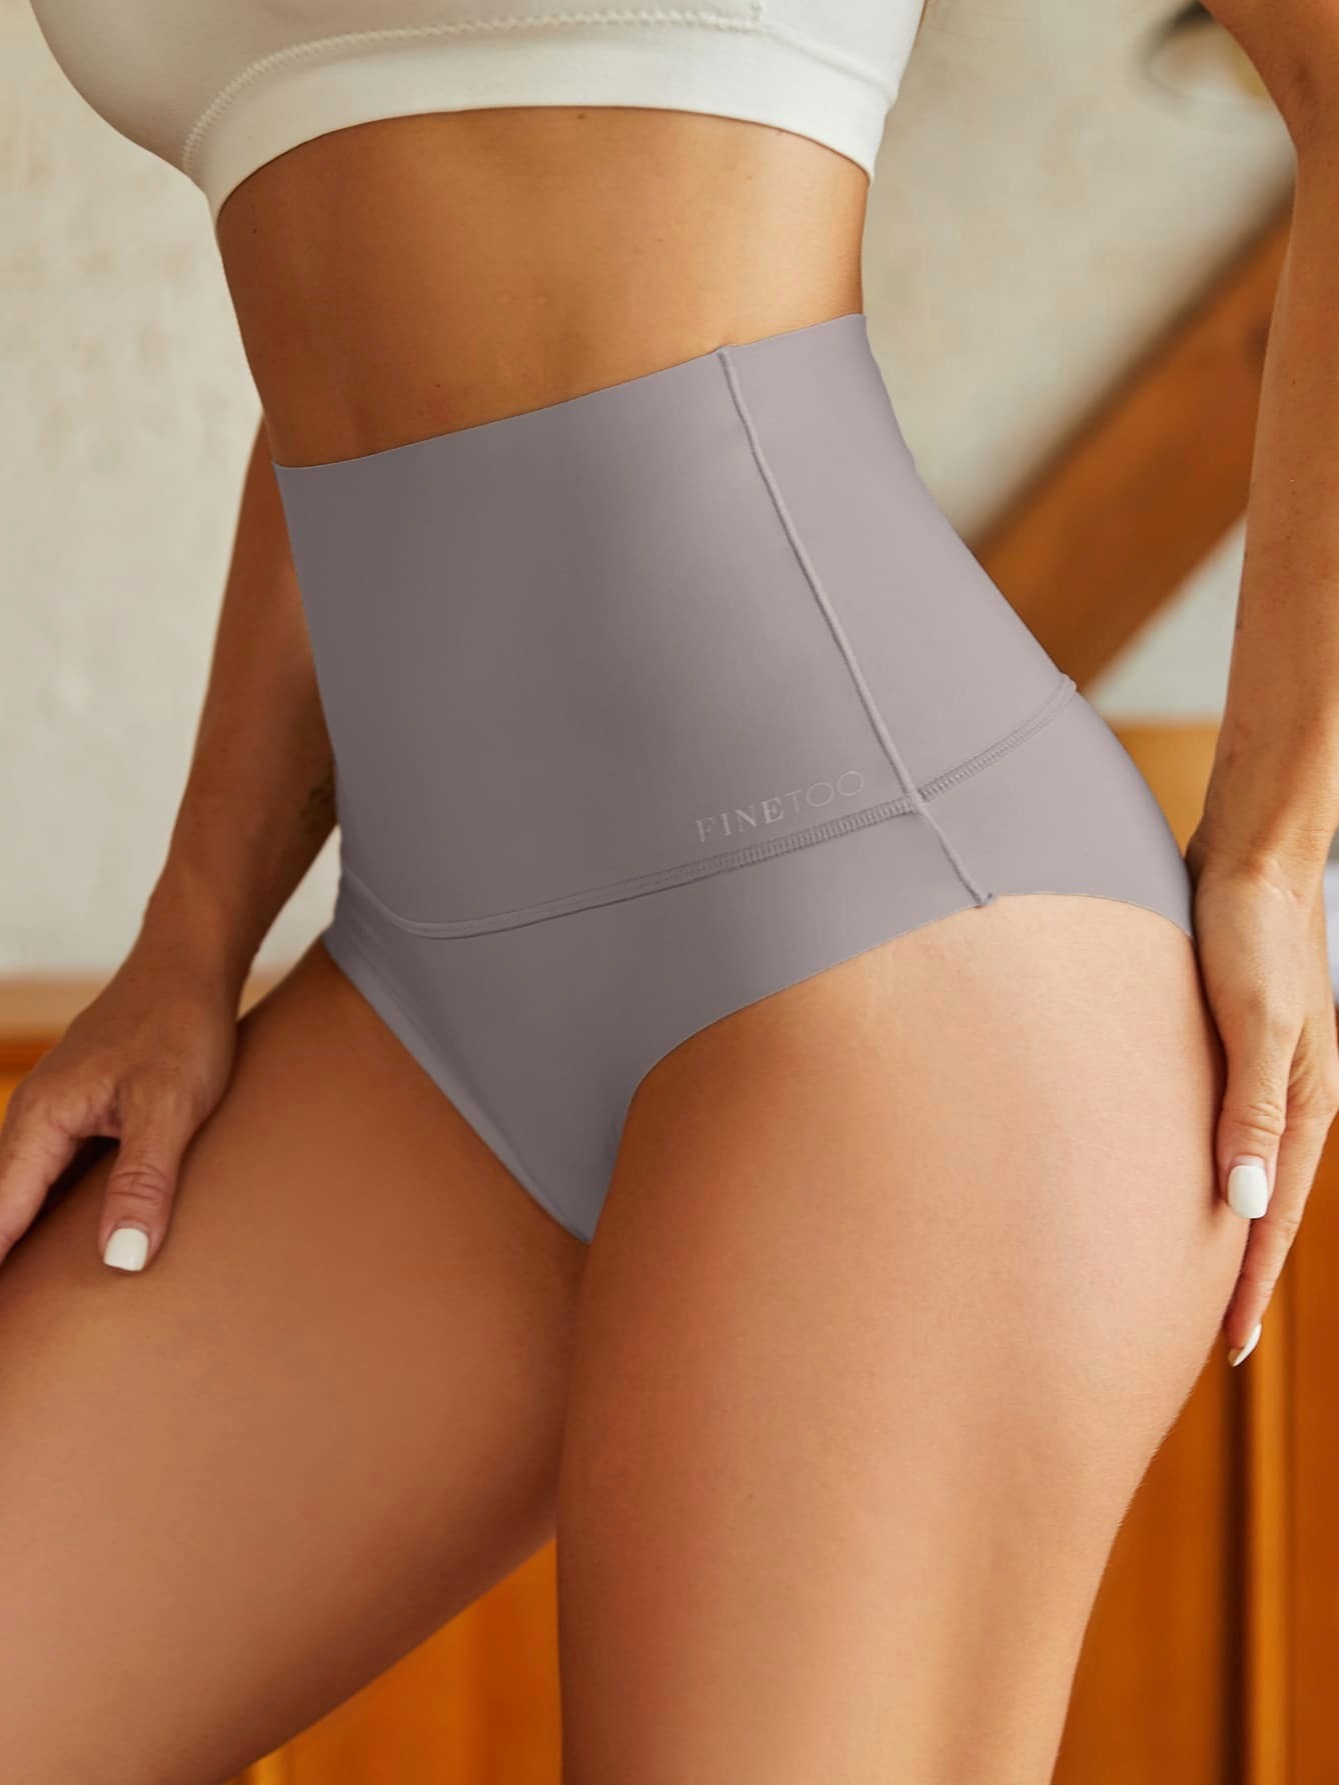 FINETOO 5pcs Women's Solid Color High Waist Seamless Comfortable Thong  Panties